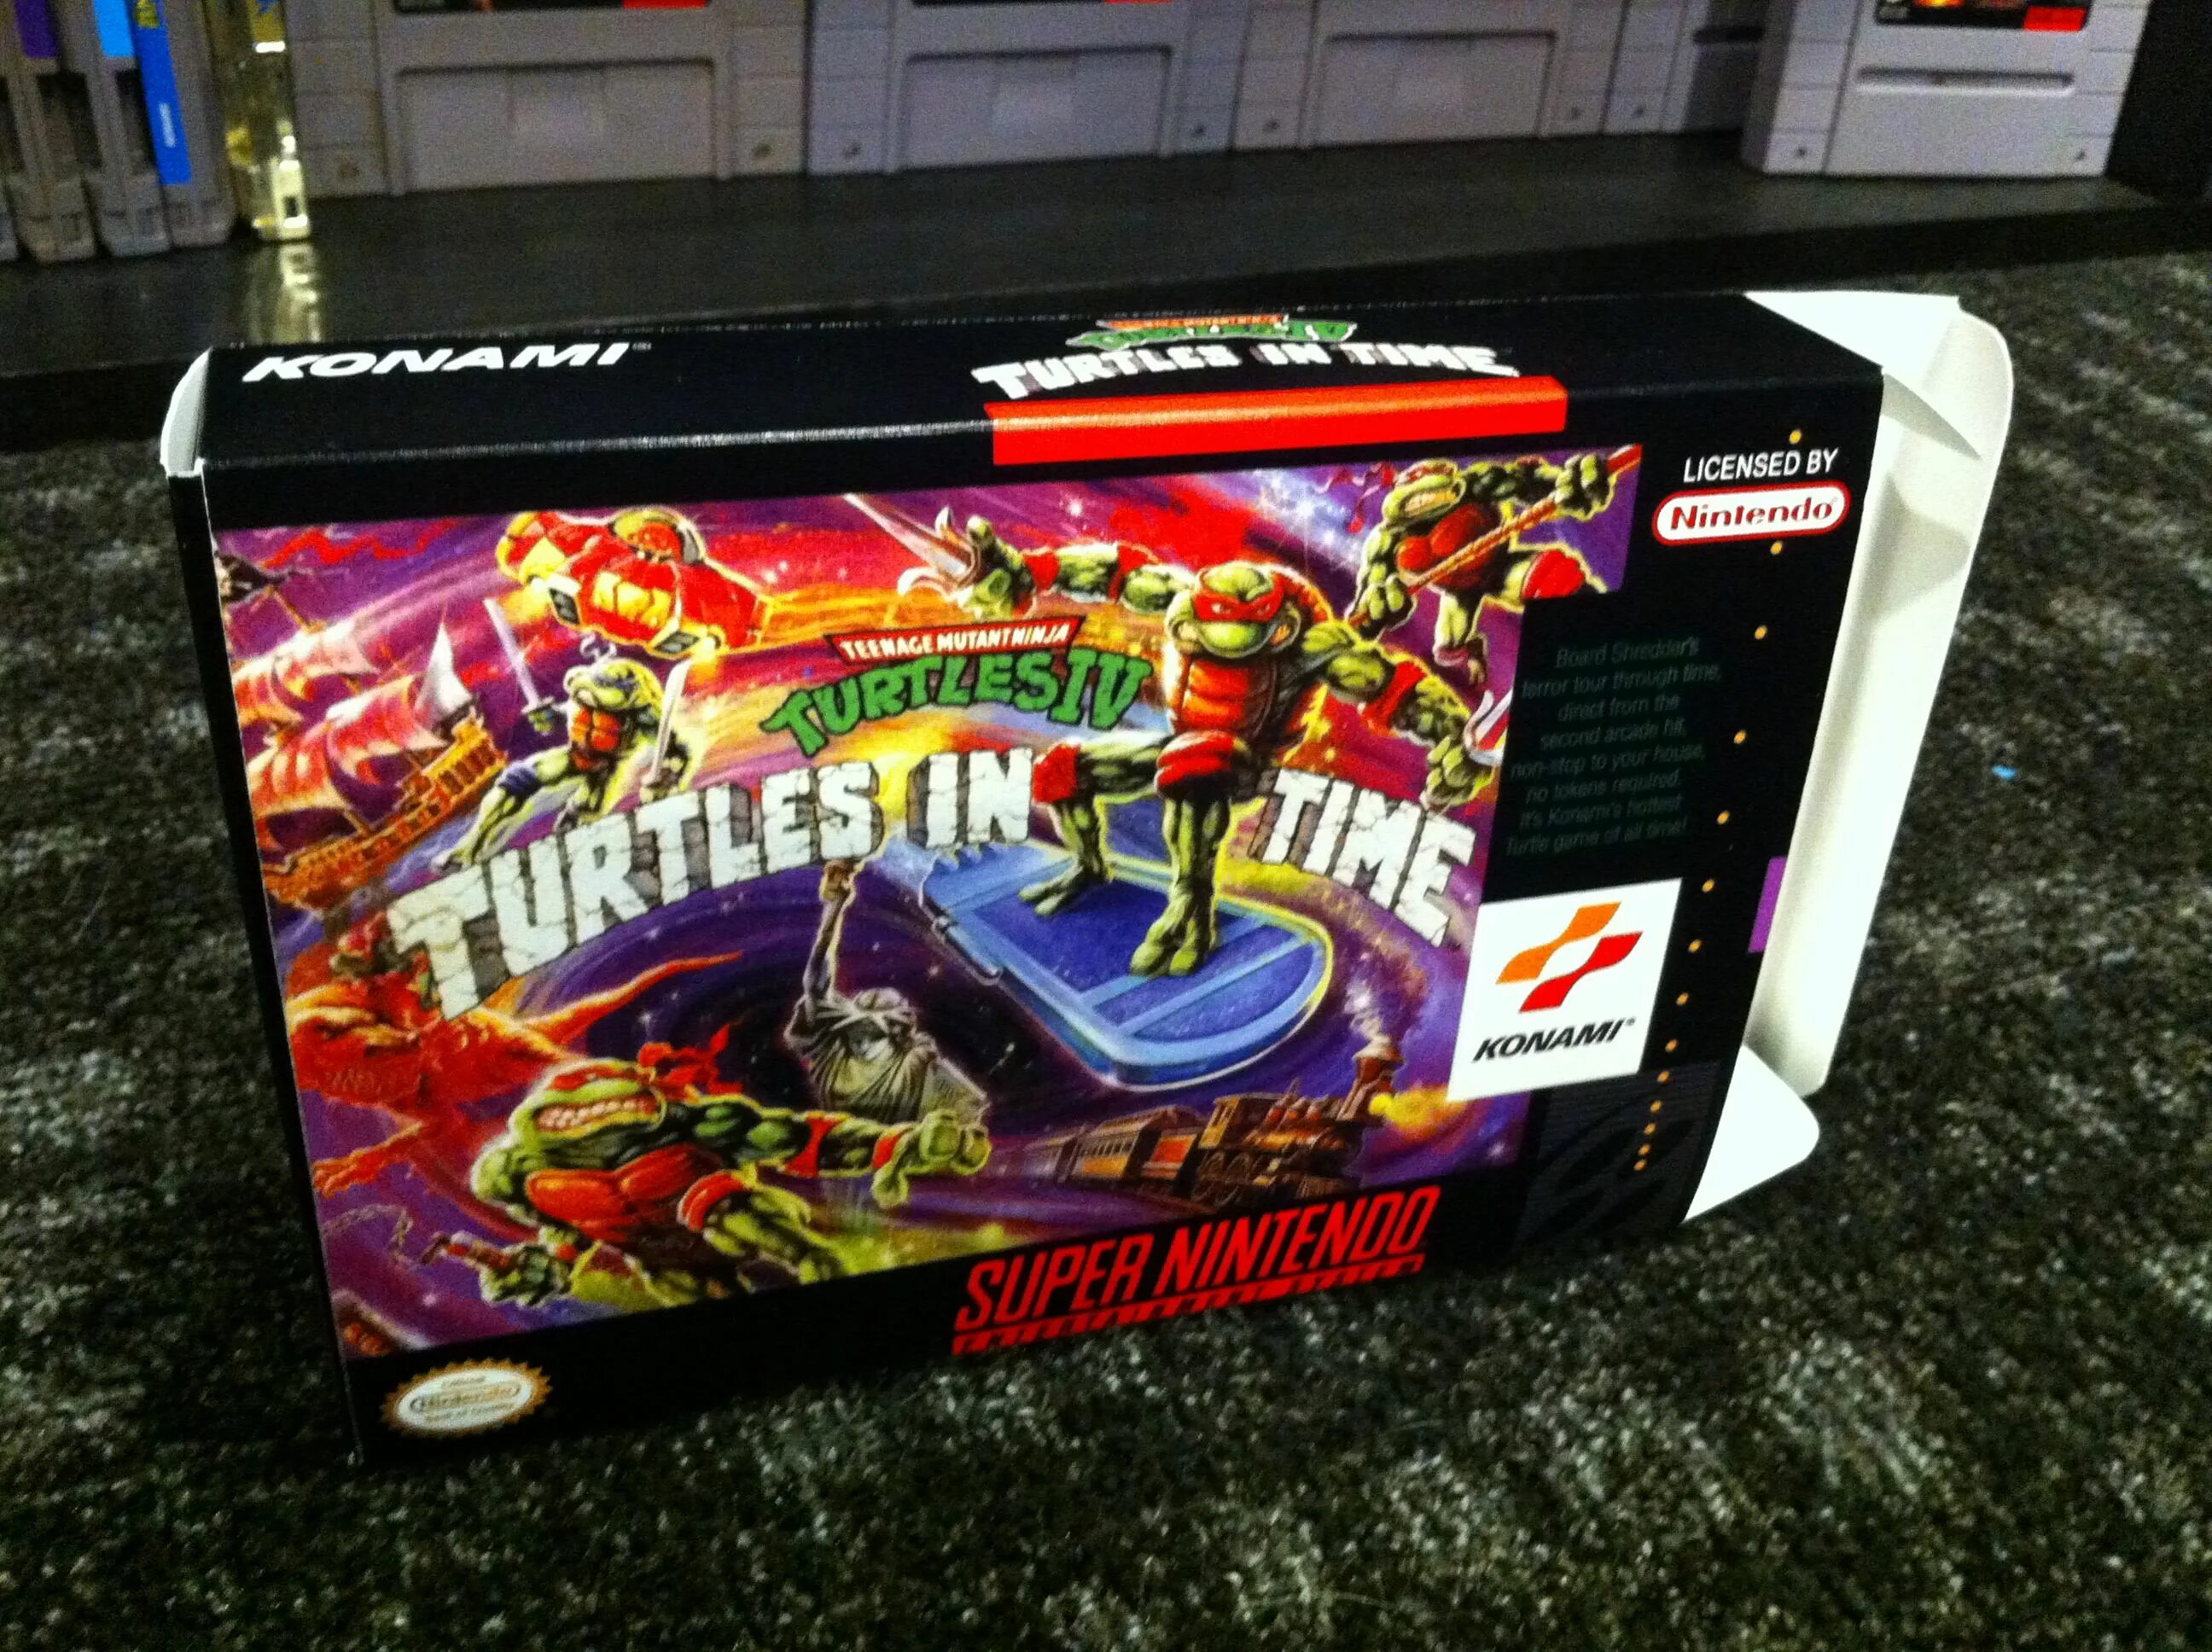 Tmnt time. Super Famicom TMNT Turtles in time. Teenage Mutant Ninja Turtles IV - Turtles in time. Super Nintendo Turtles in time картридж. Snes teenage Mutant Ninja Turtles 4.